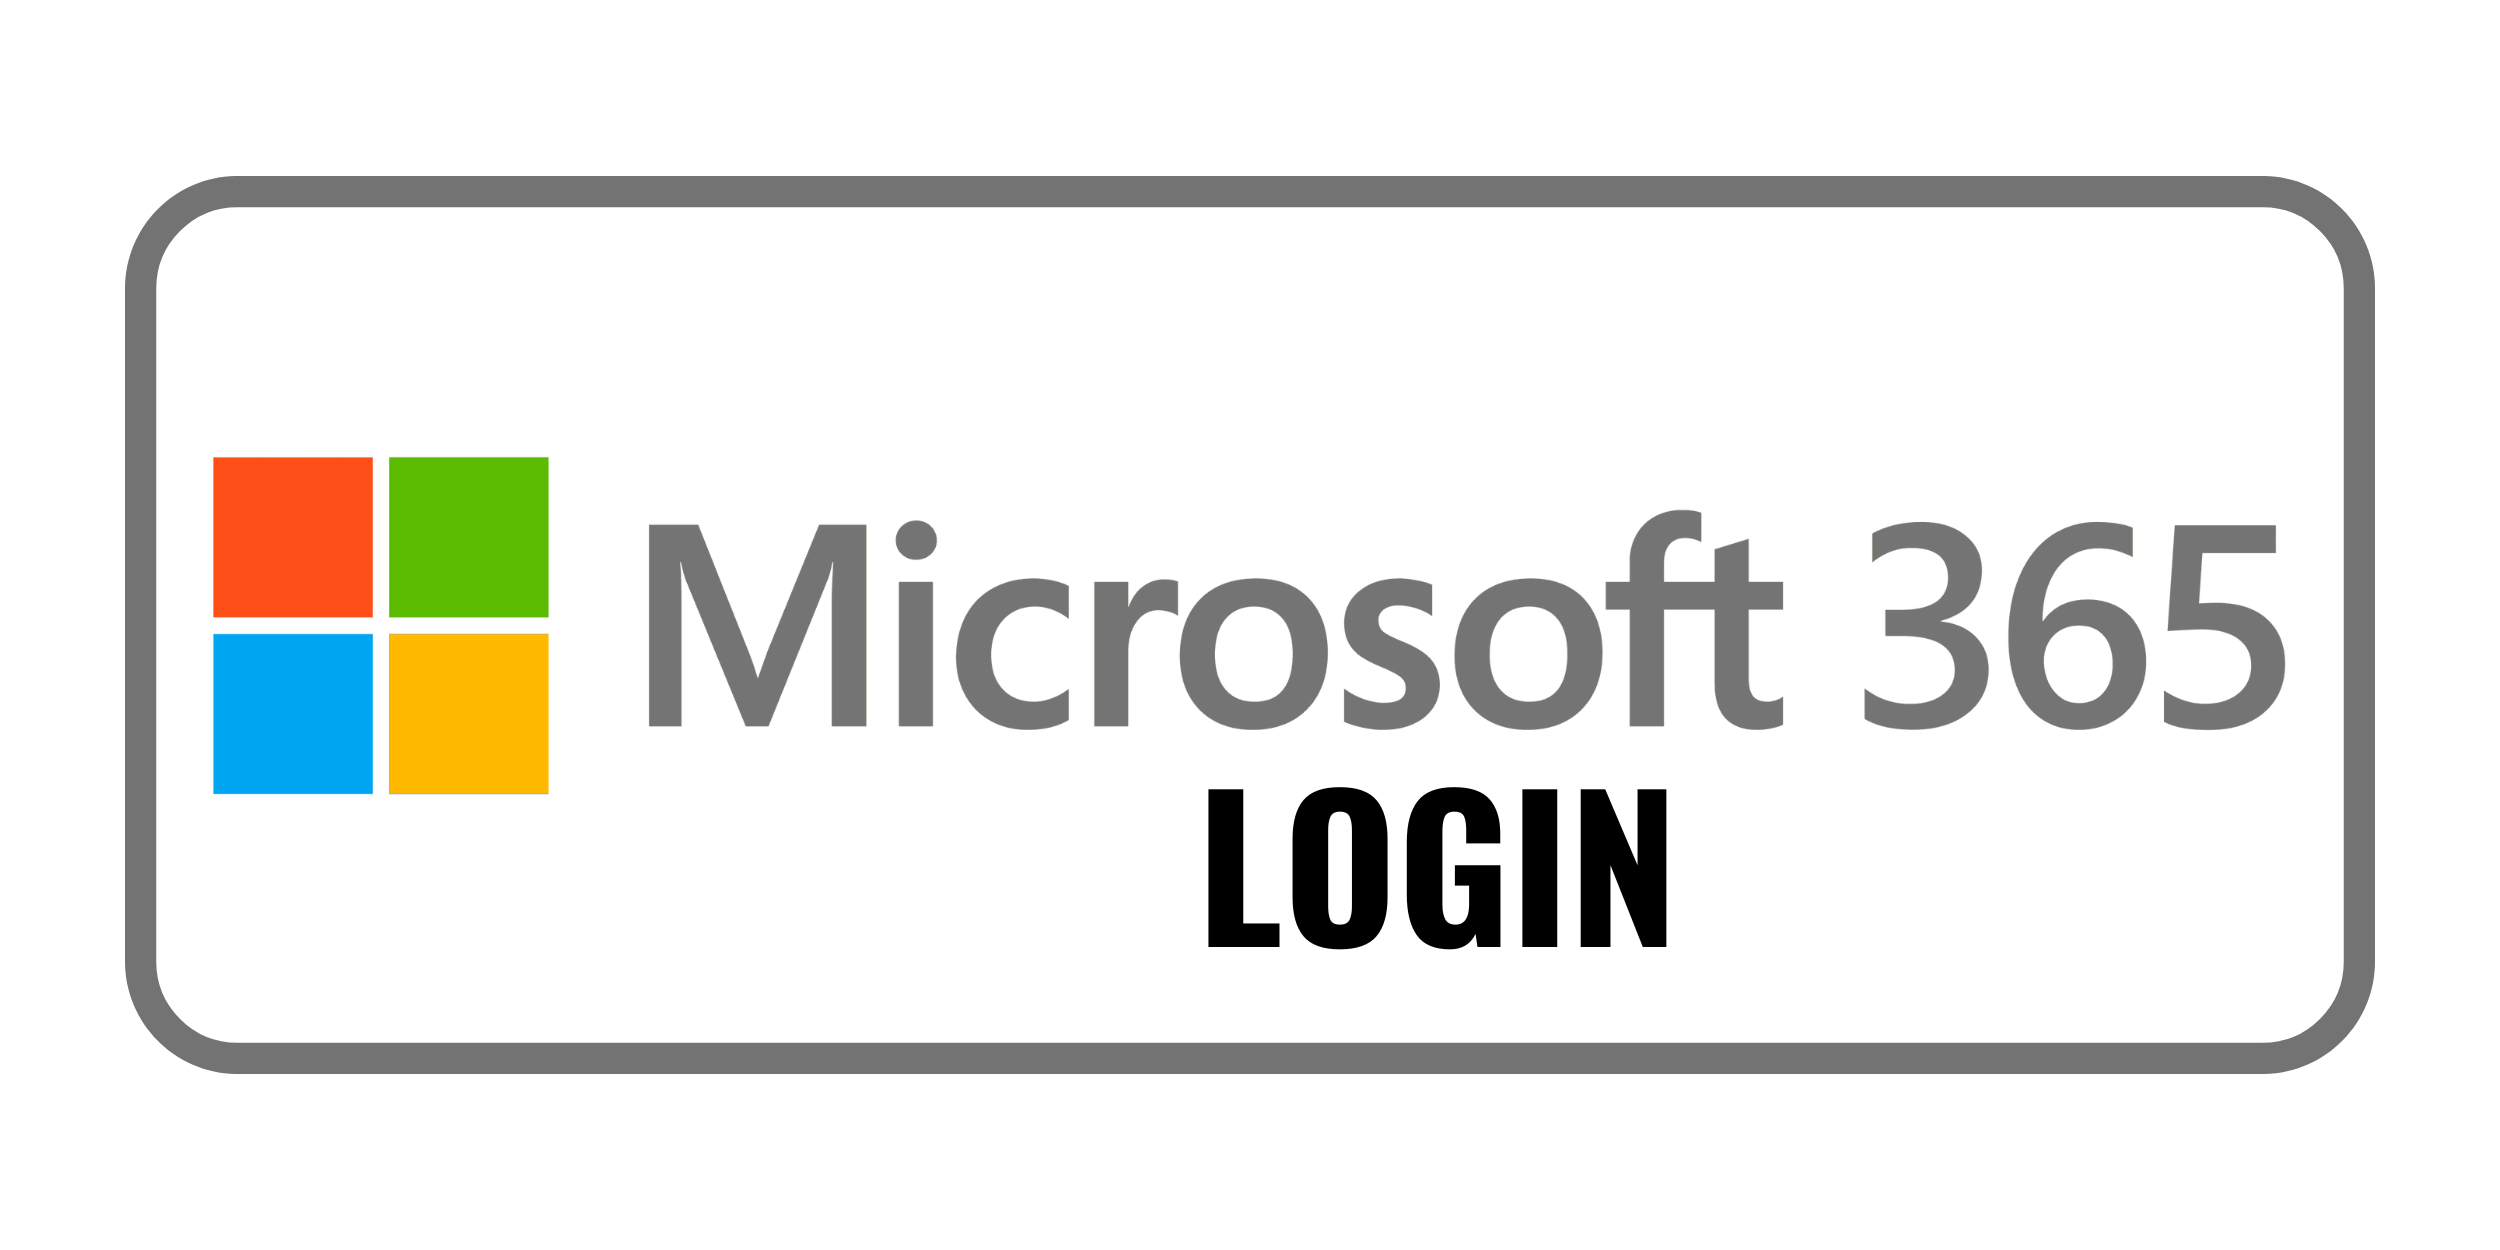 Microsoft 365 Image and Link